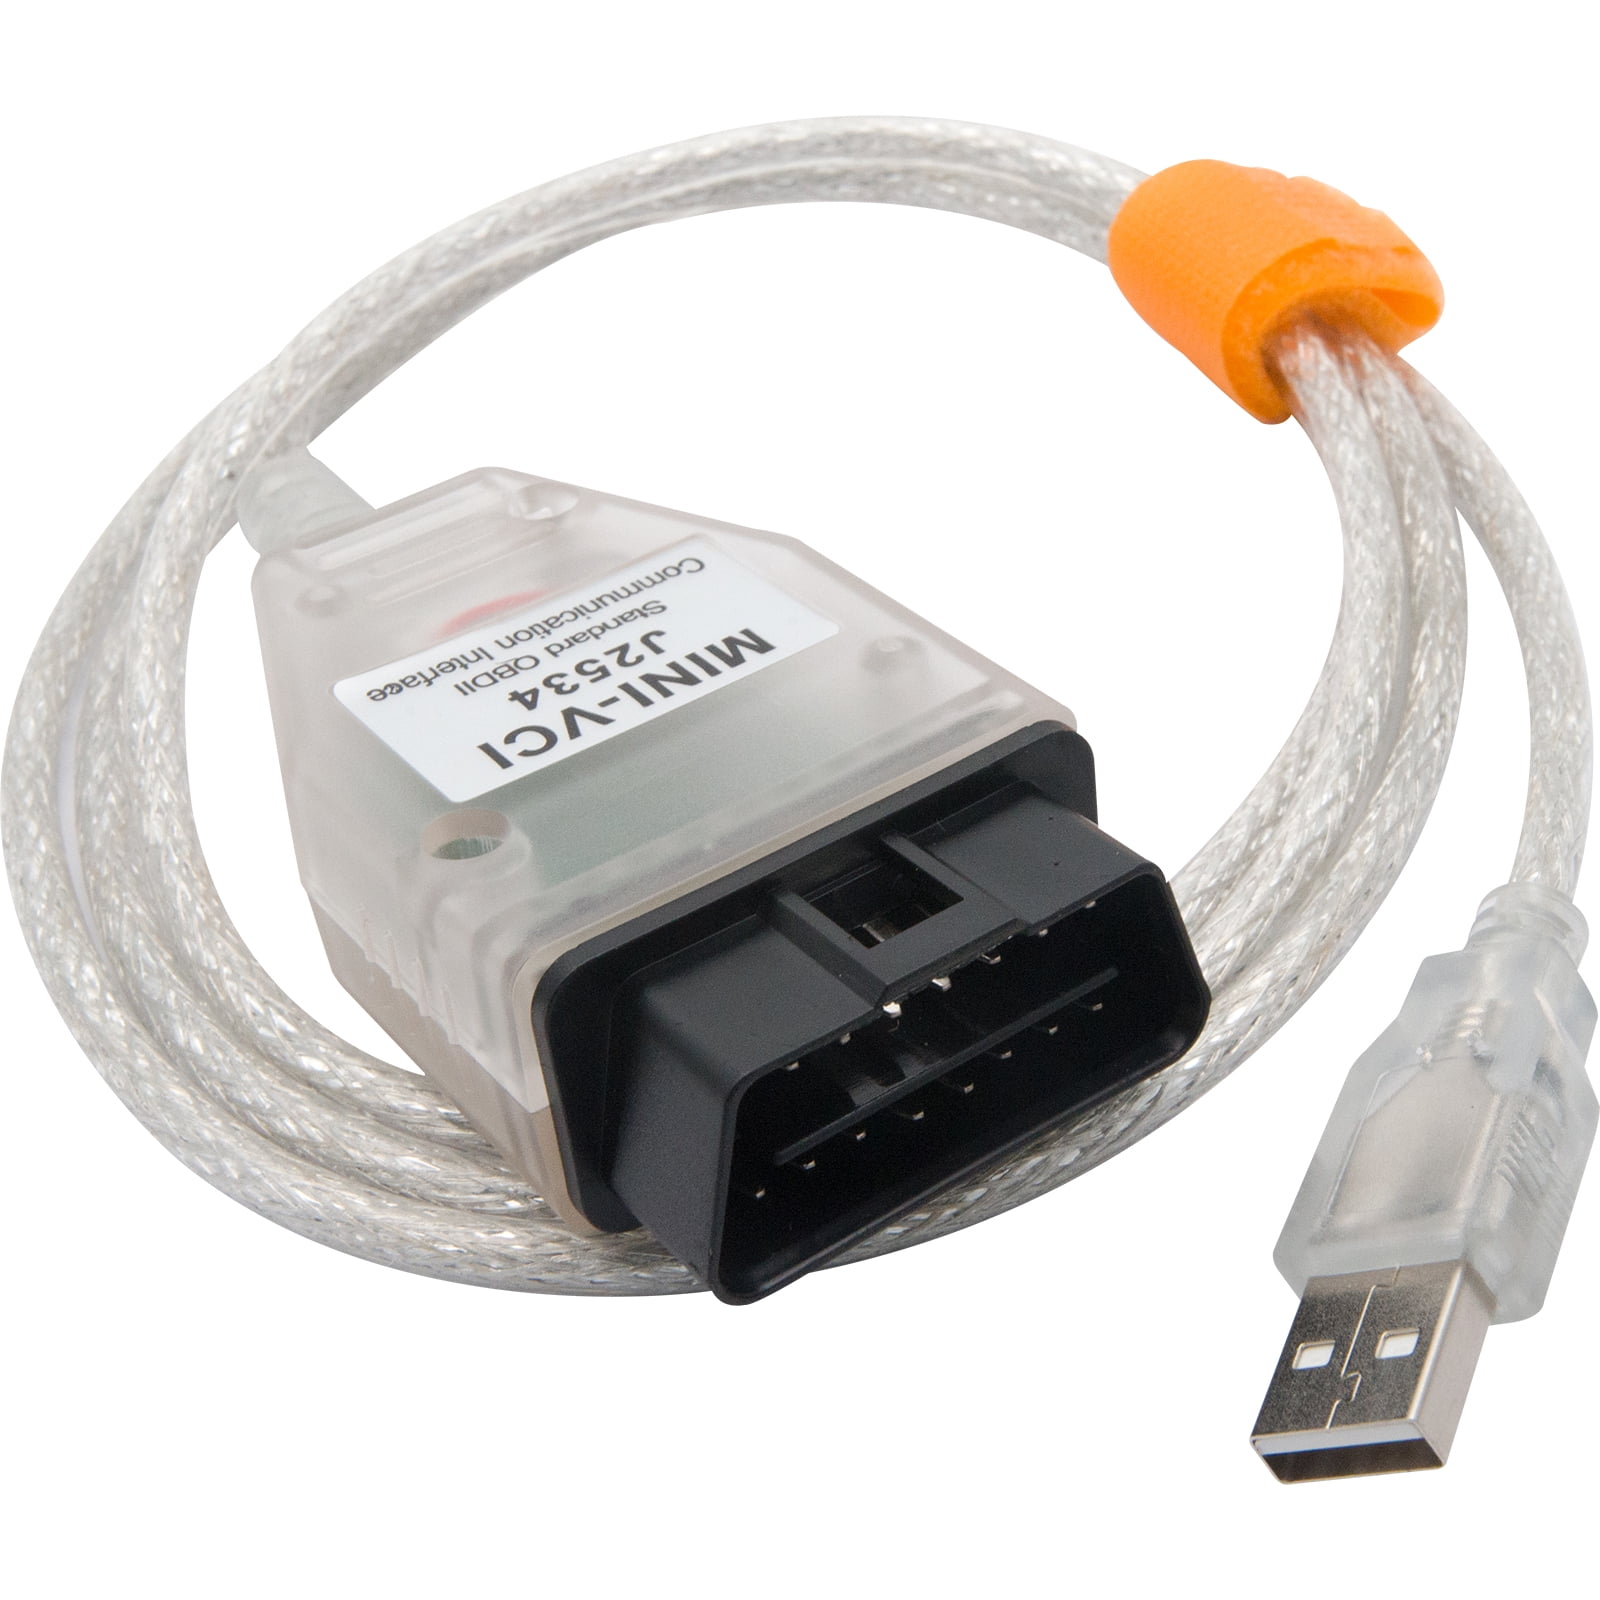 1 X For Toyota Lexus VCI USB OBD2 Car Diagnostics Cable Scanner TIS Techstream 